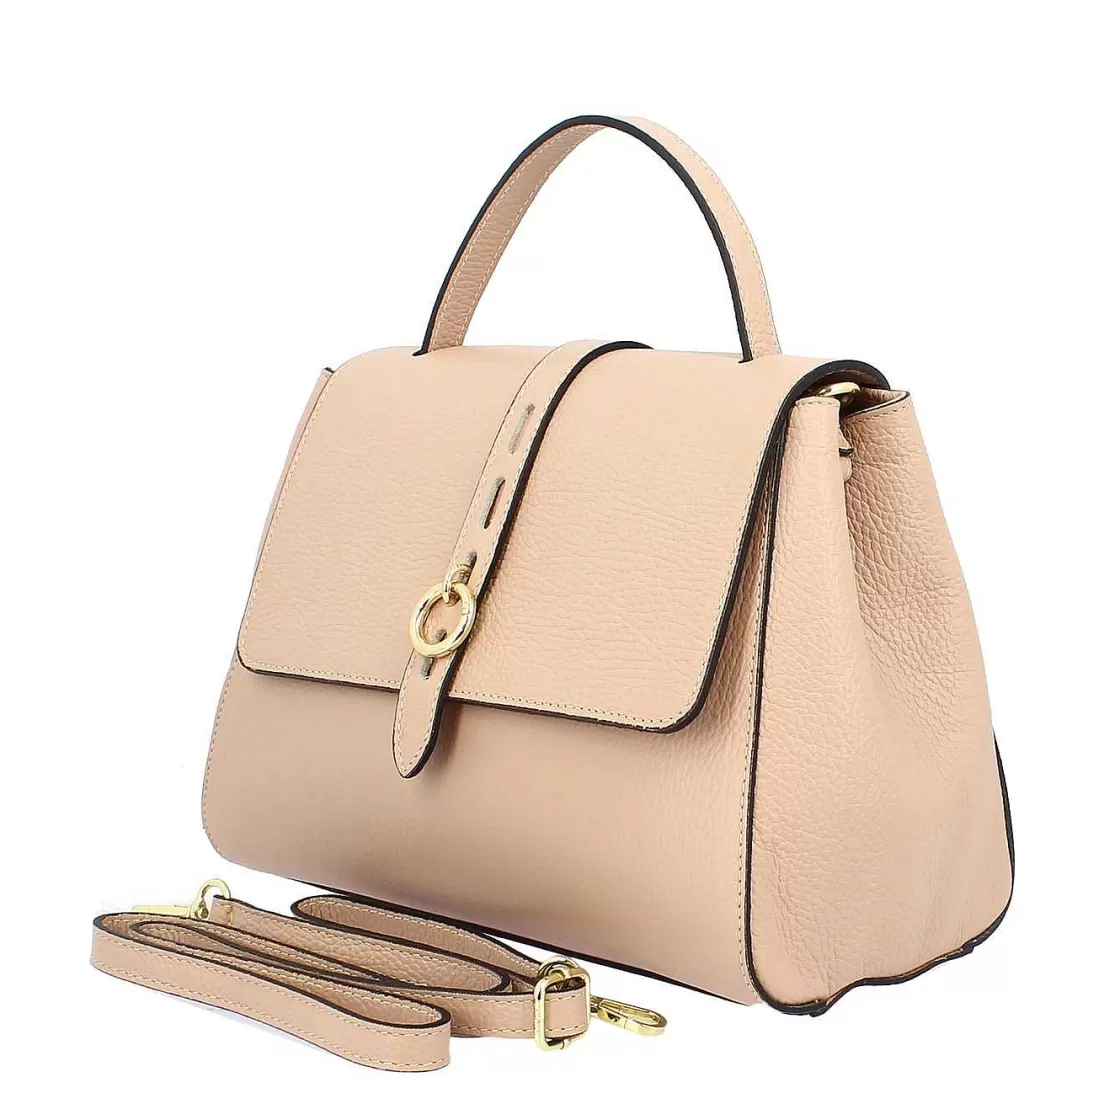 Leonardo Carla Handcrafted Women'S Handbag In Leather In Different Colors Shop